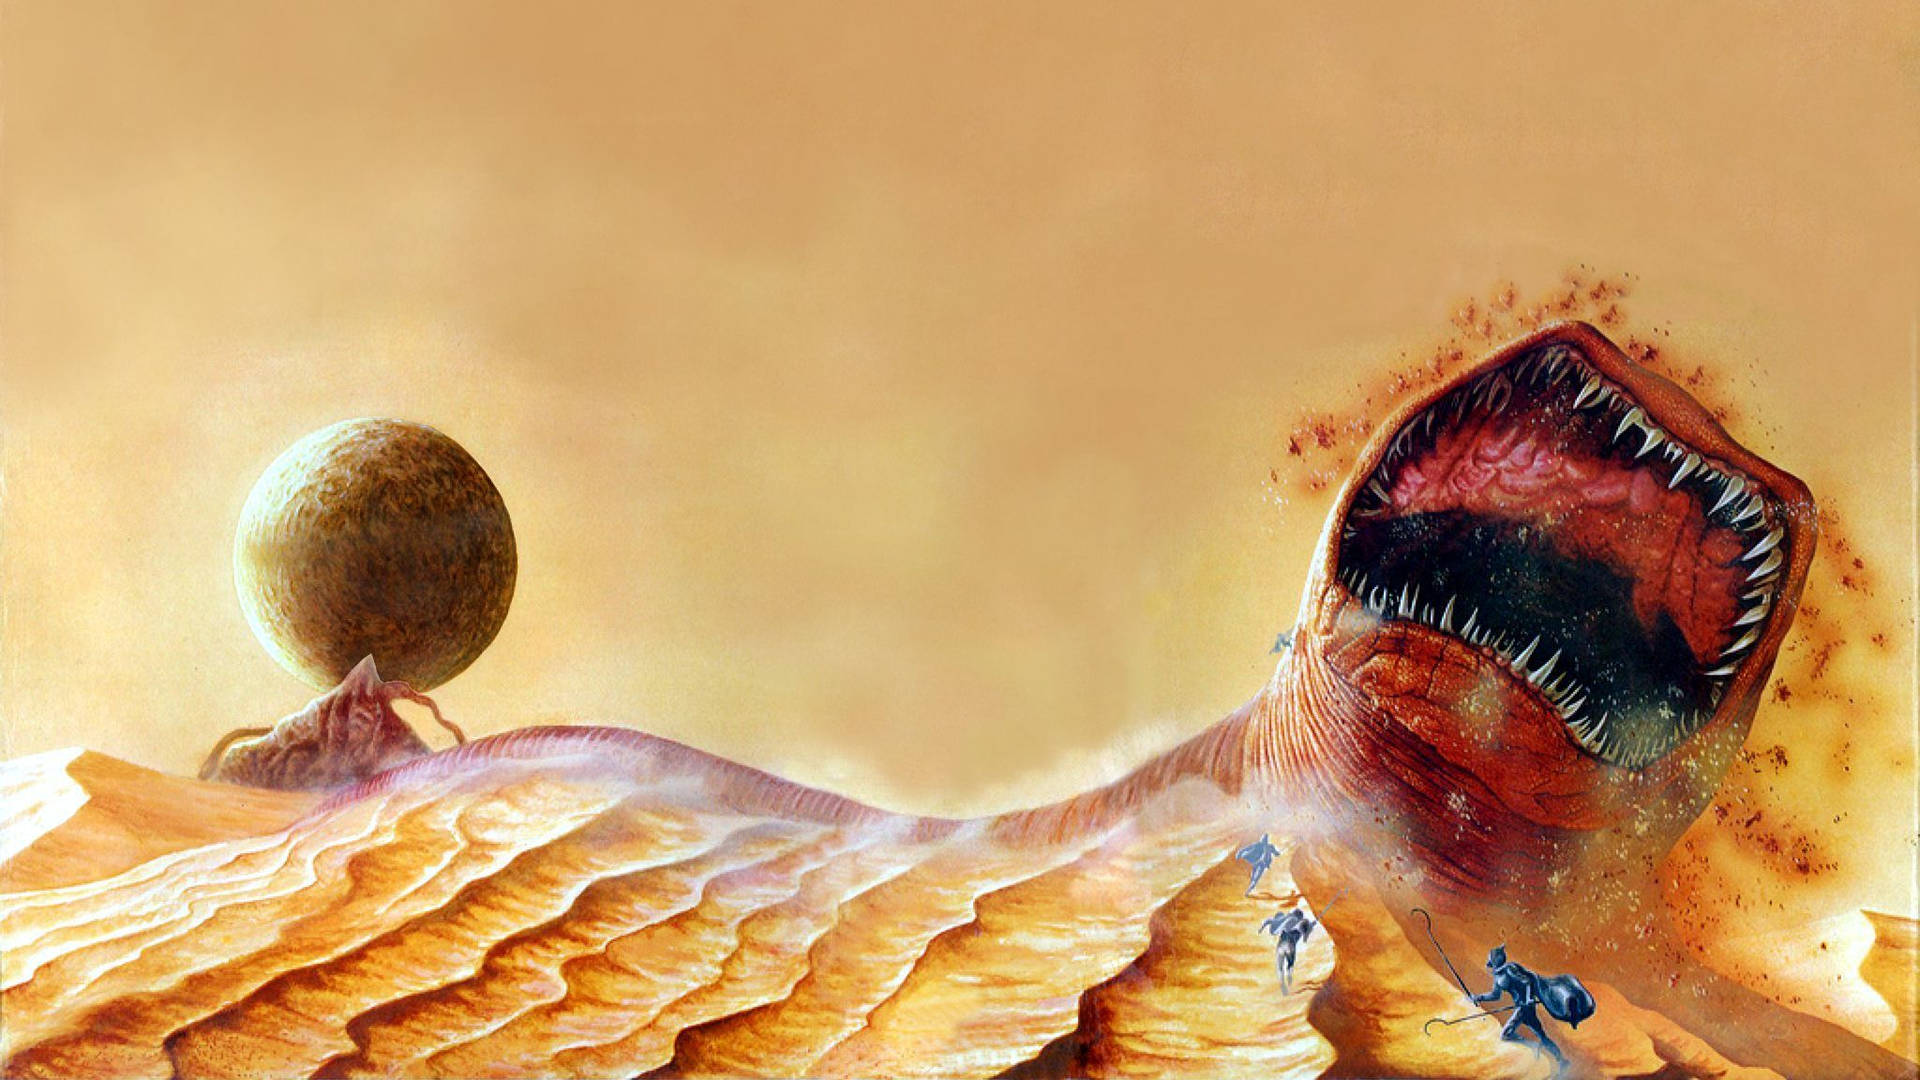 The Great Dune Trilogy Digital Art Book Cover Wallpaper